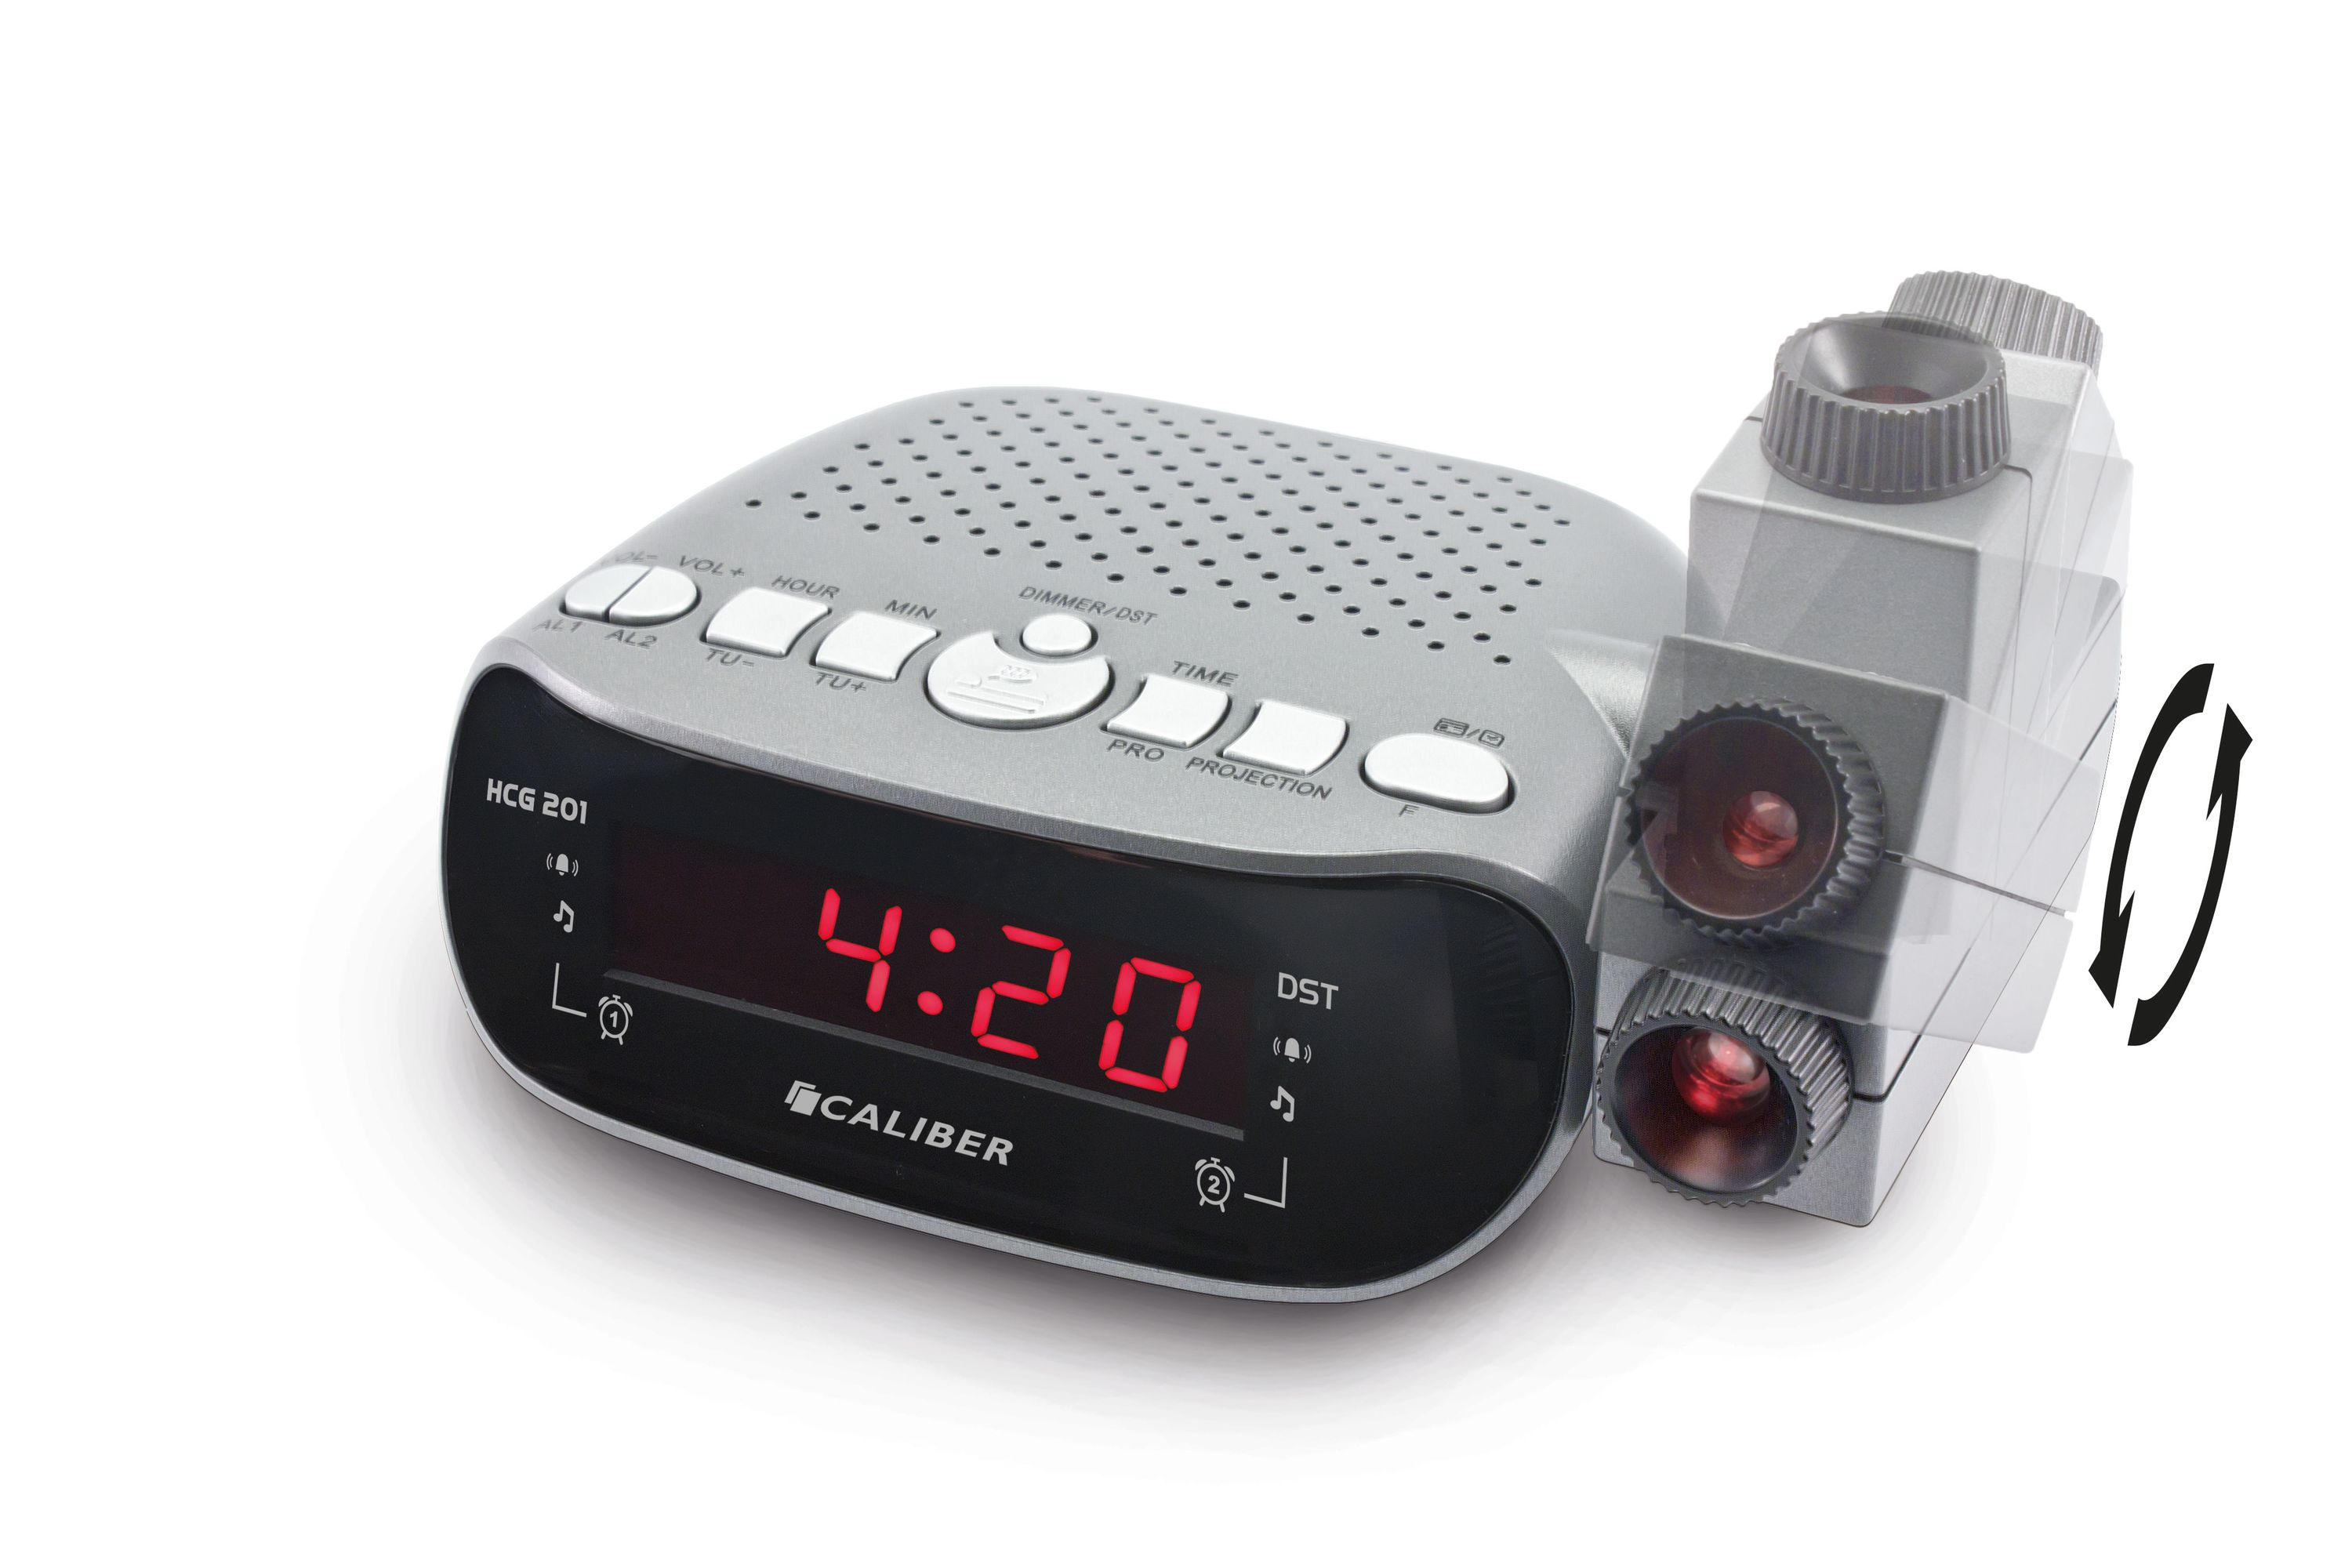 CALIBER HCG201 Bluetooth, Grau FM, Radio-Uhr